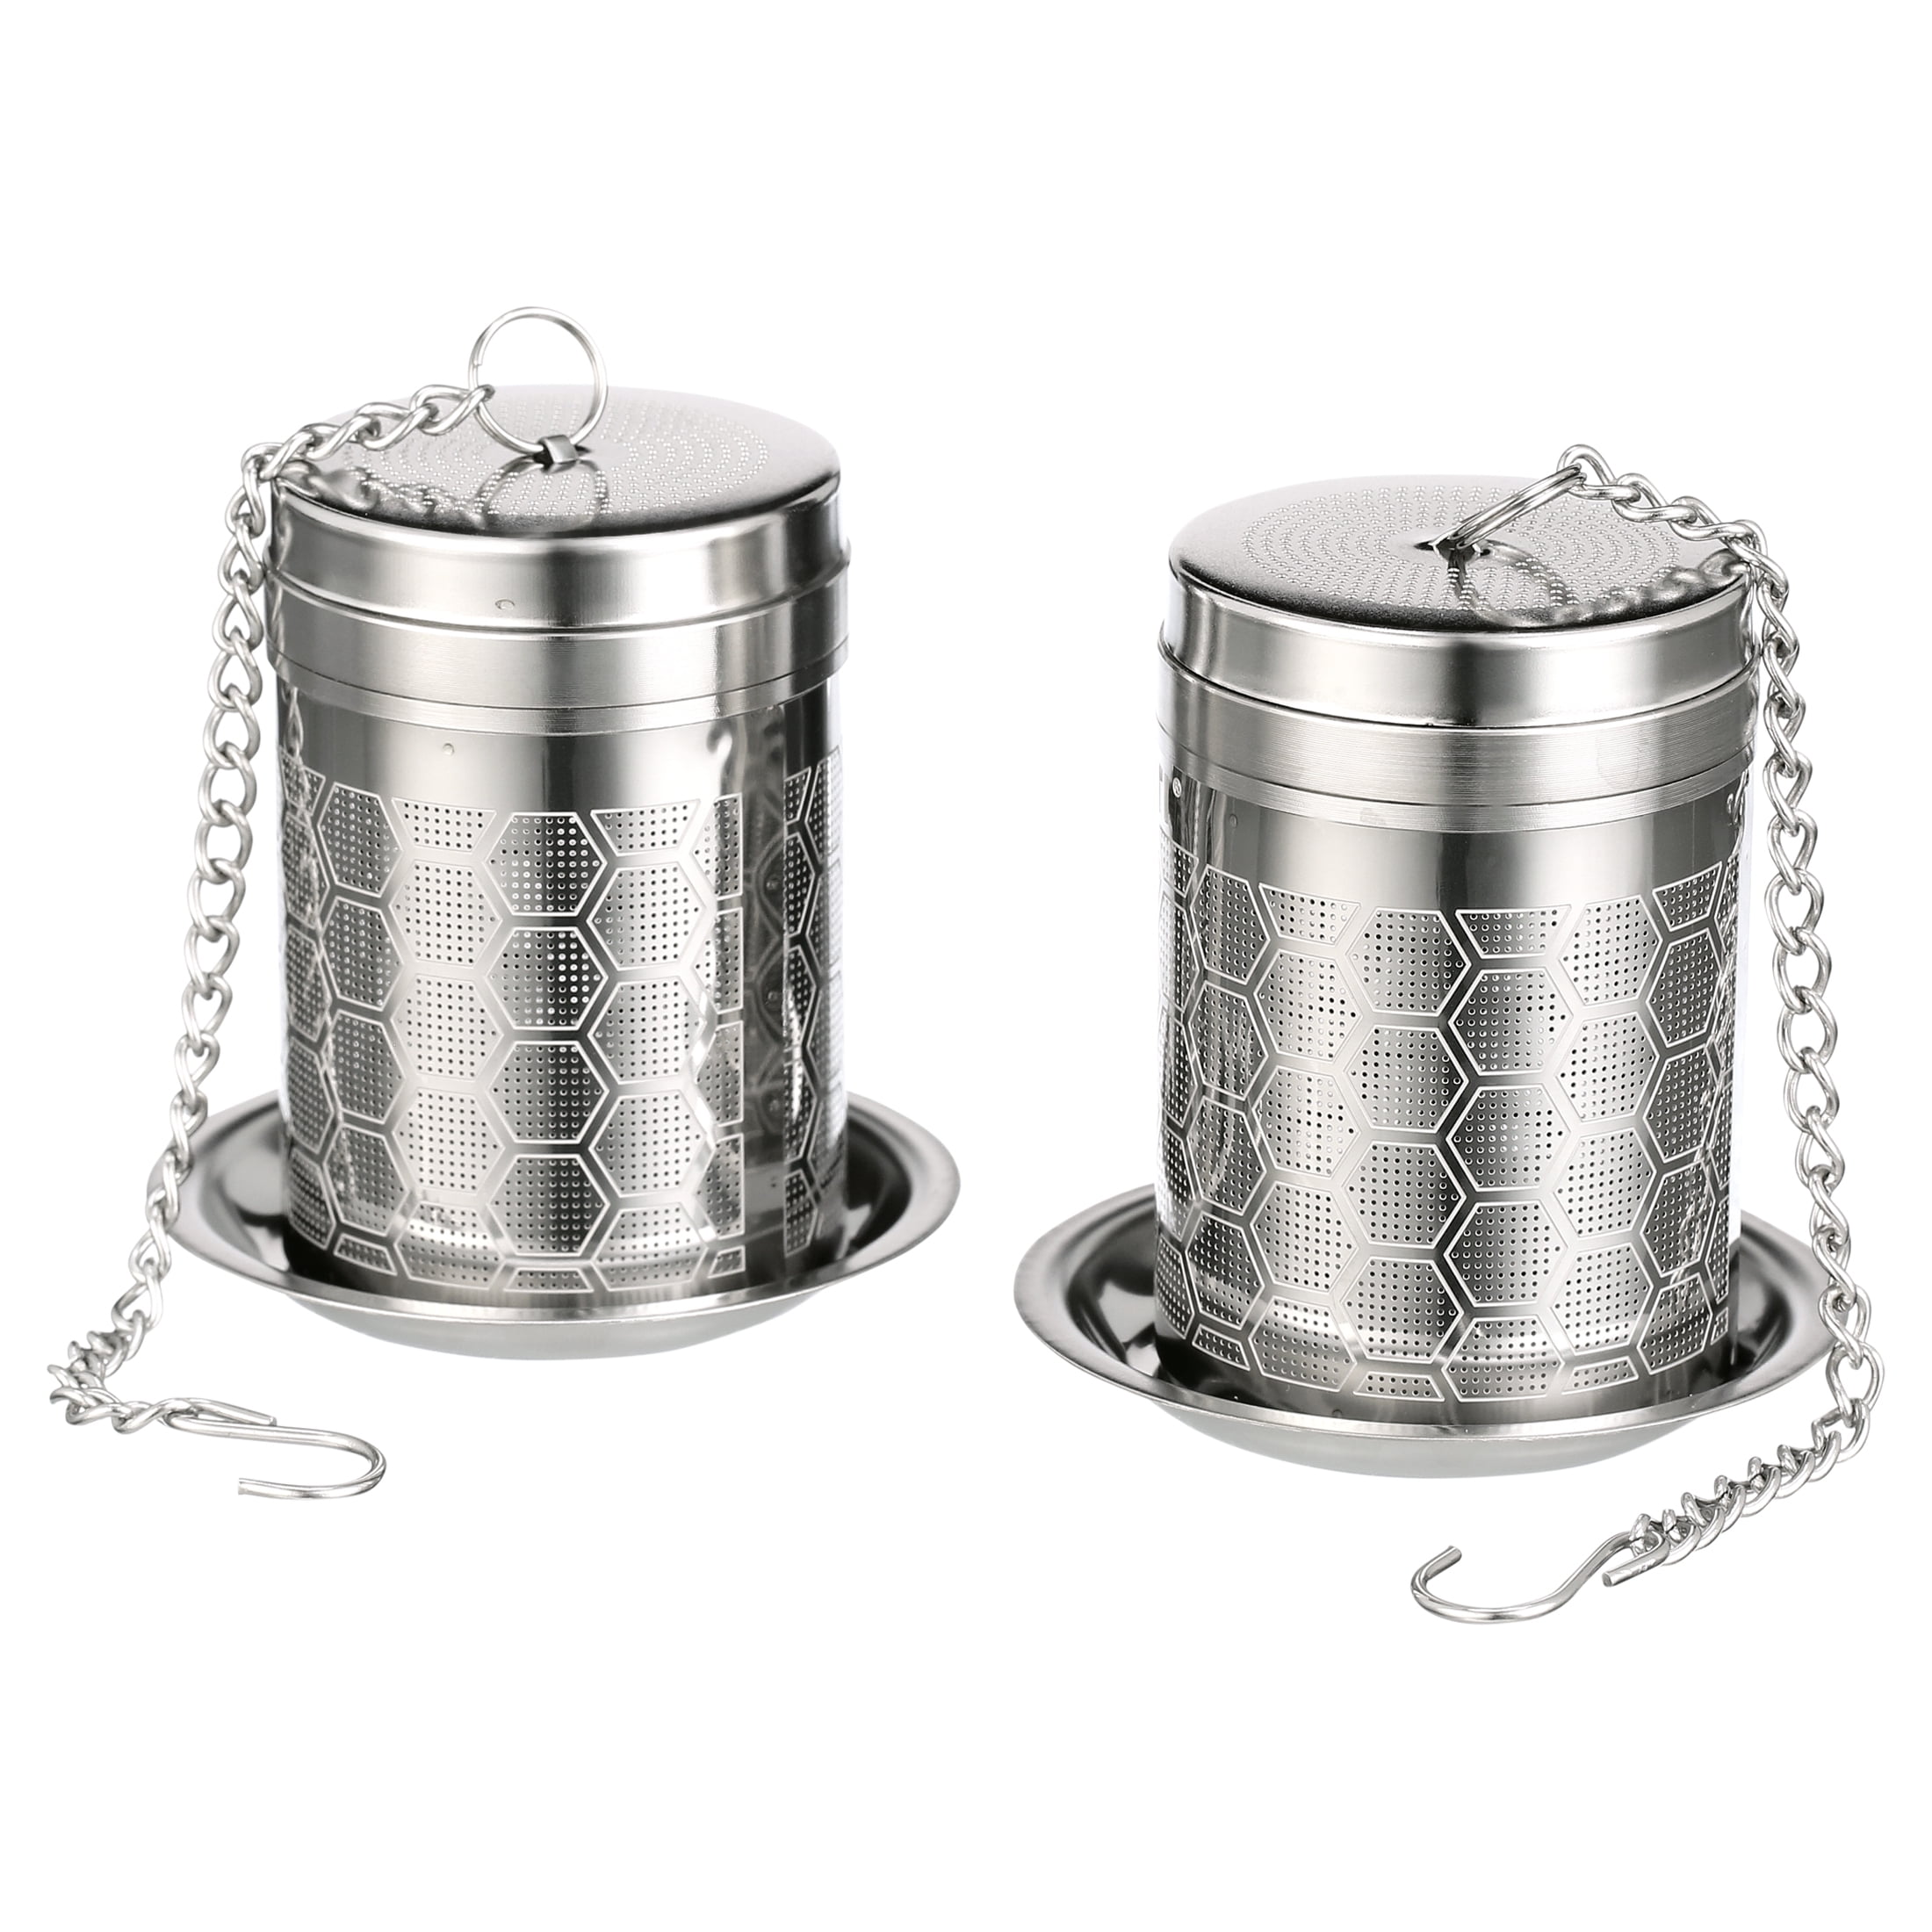  2 Pack Stainless Steel Tea Infuser for loose tea